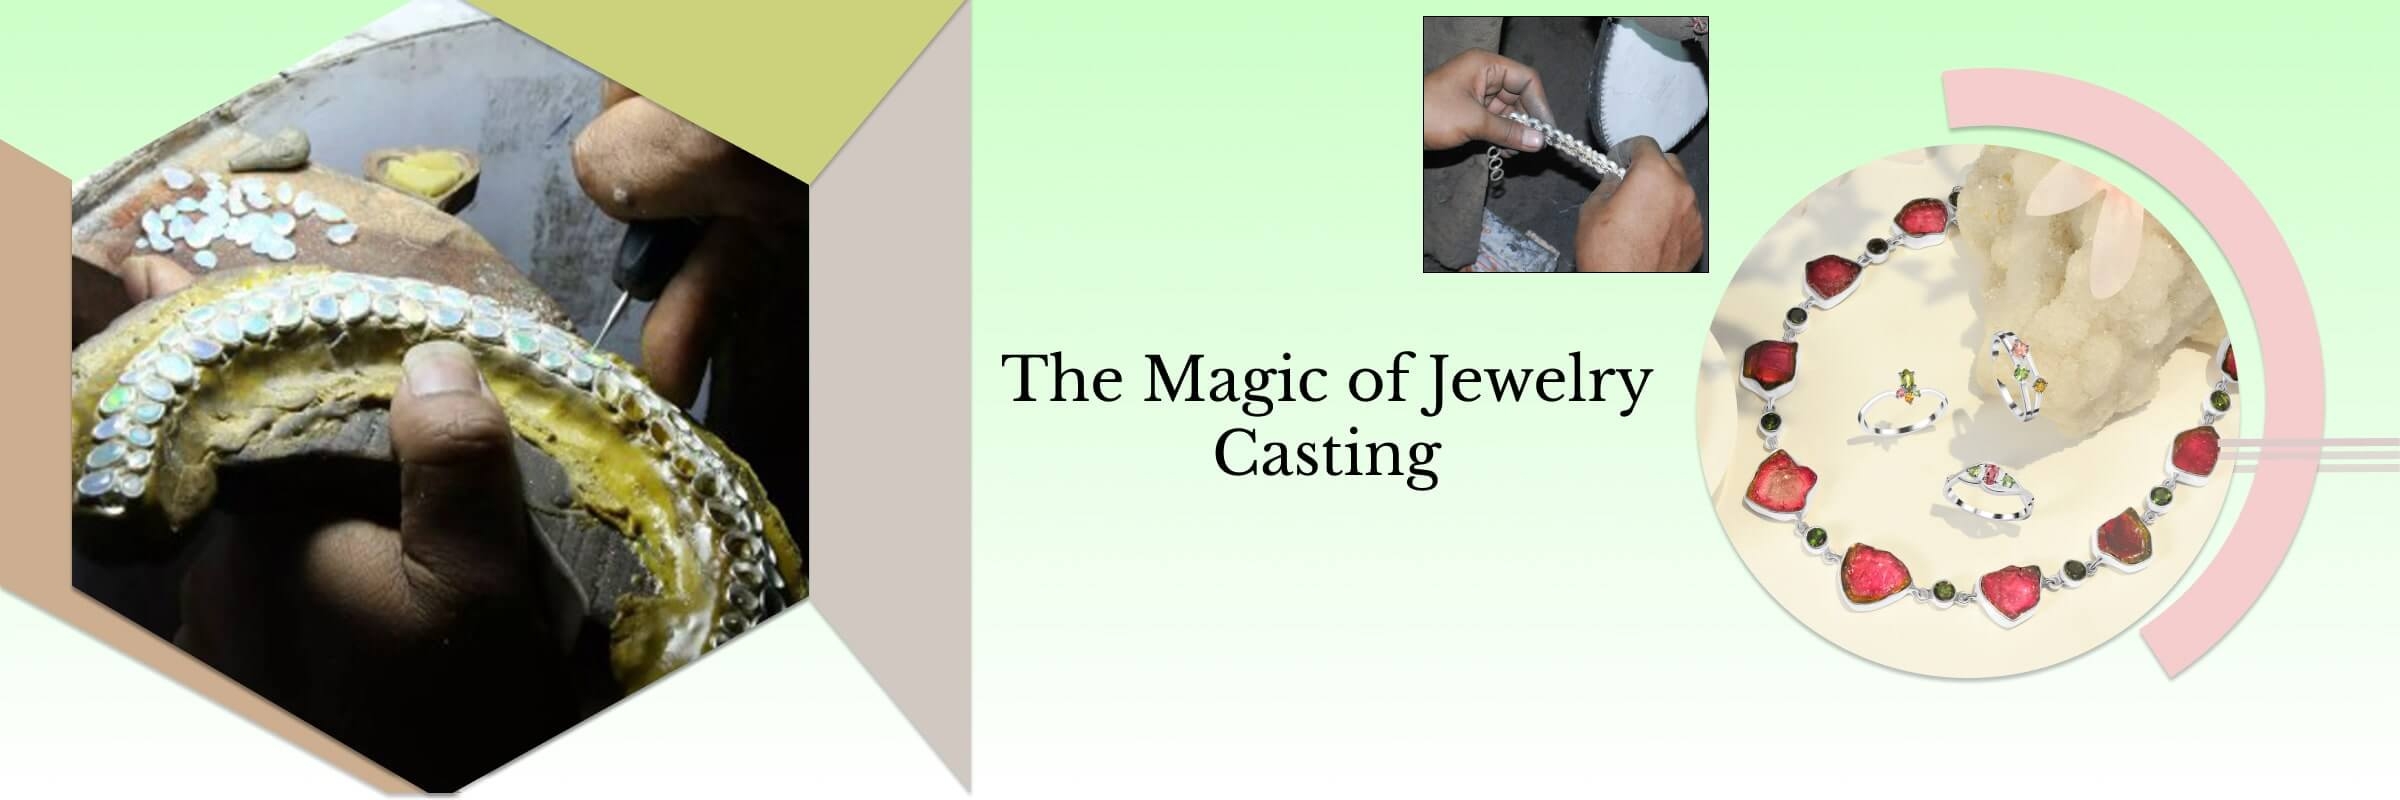 Casting jewelry process